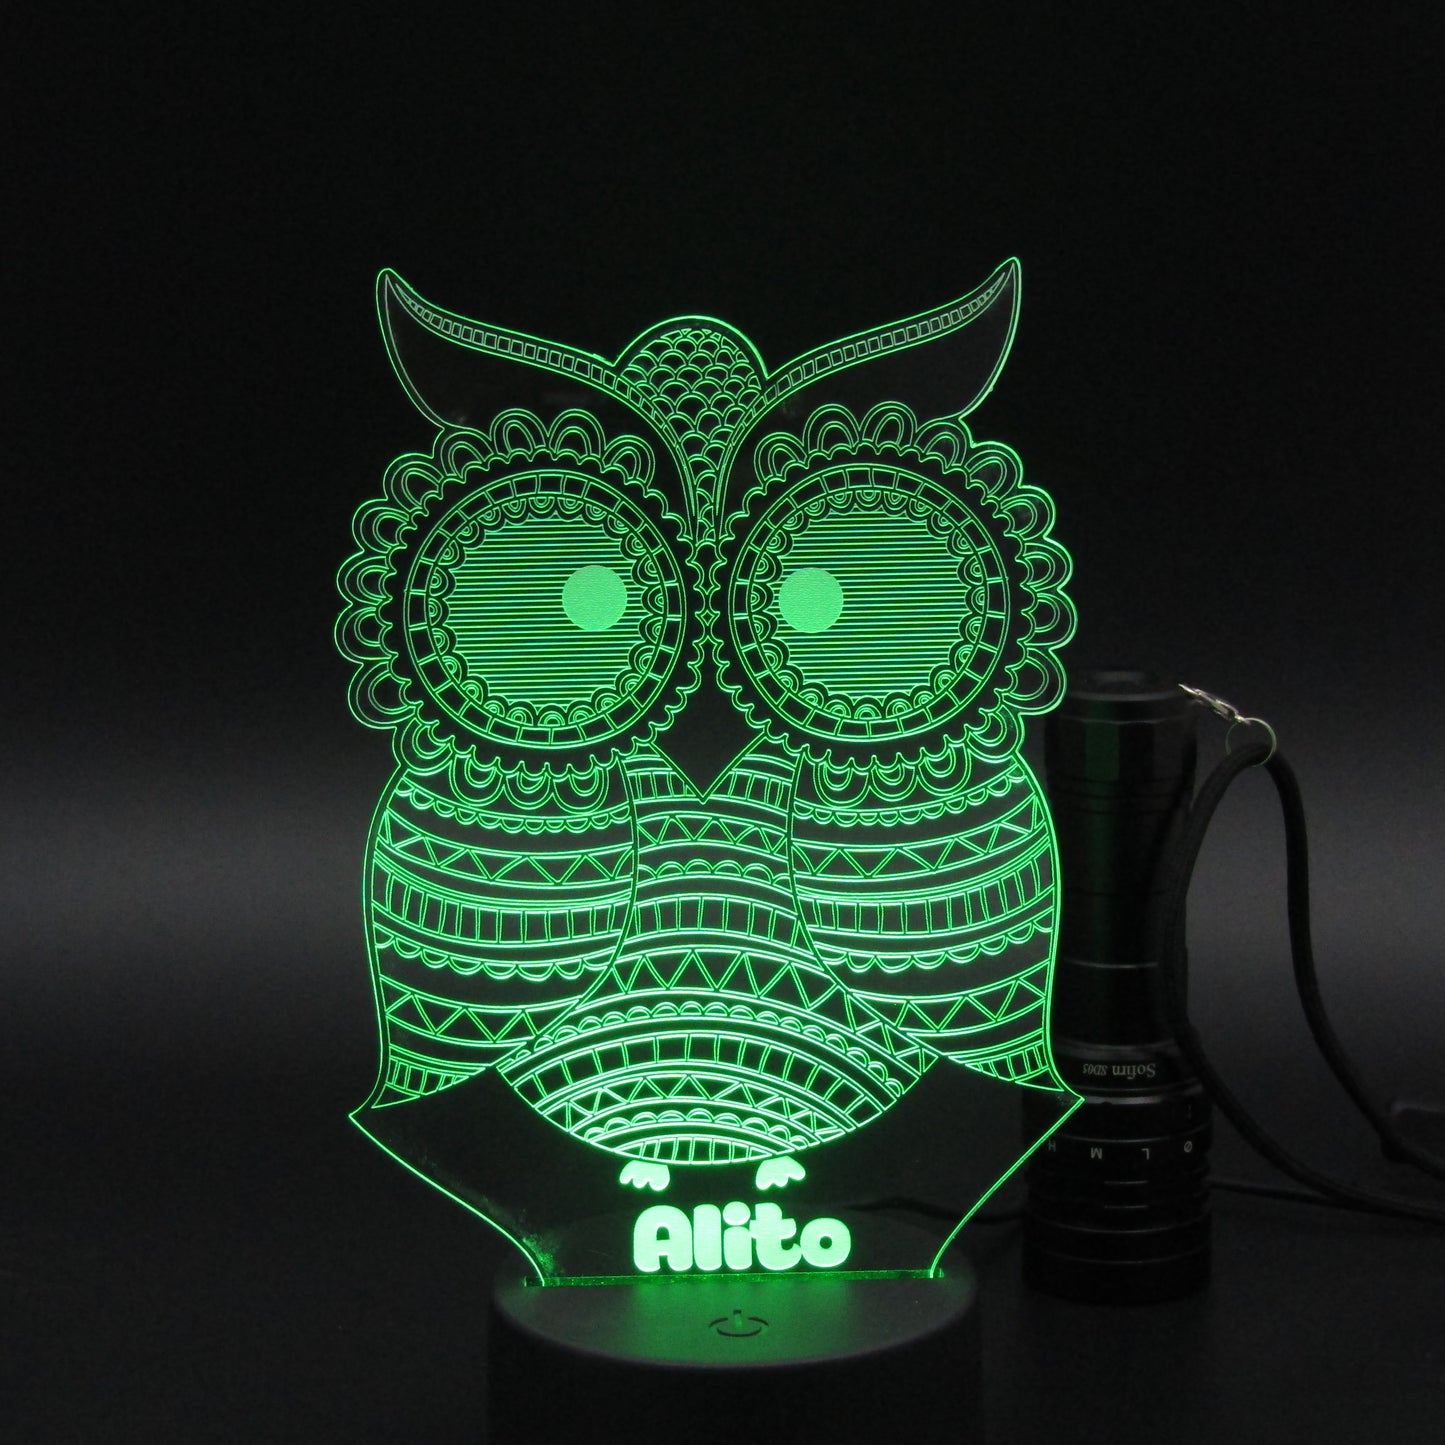 Personalized owl bird 3D night light